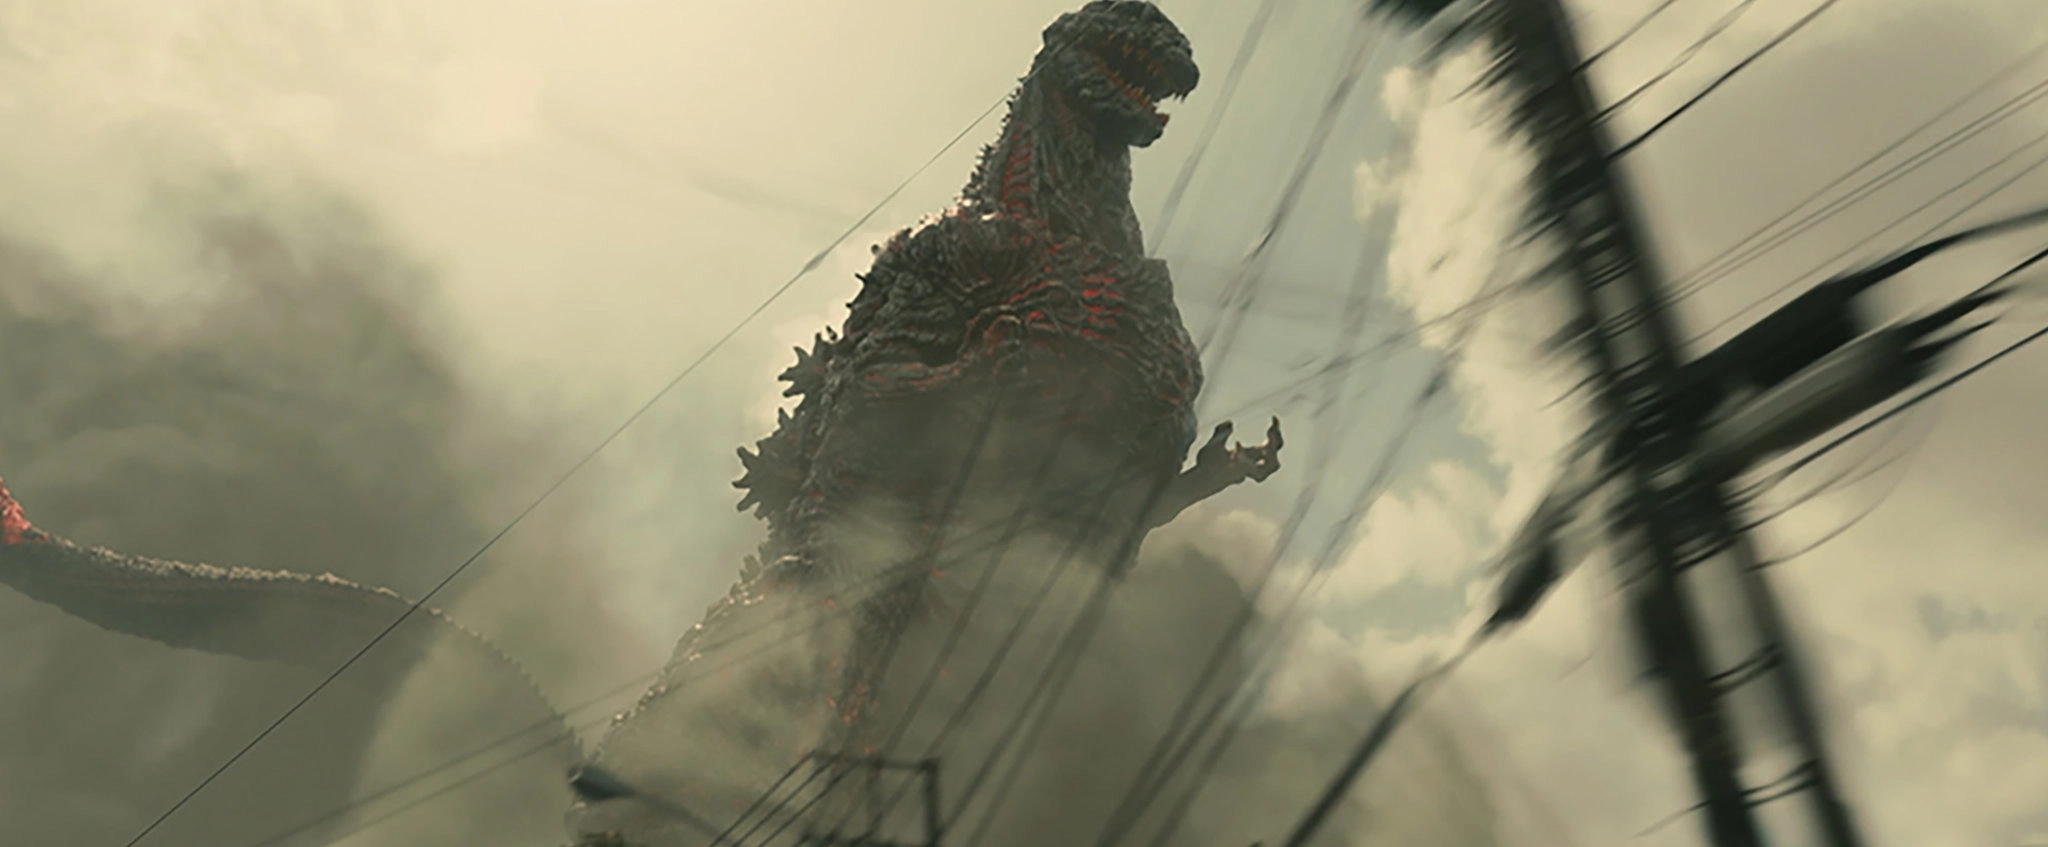 Godzilla regresará en 2023 con nuevo filme dirigido por Takashi Yamazaki